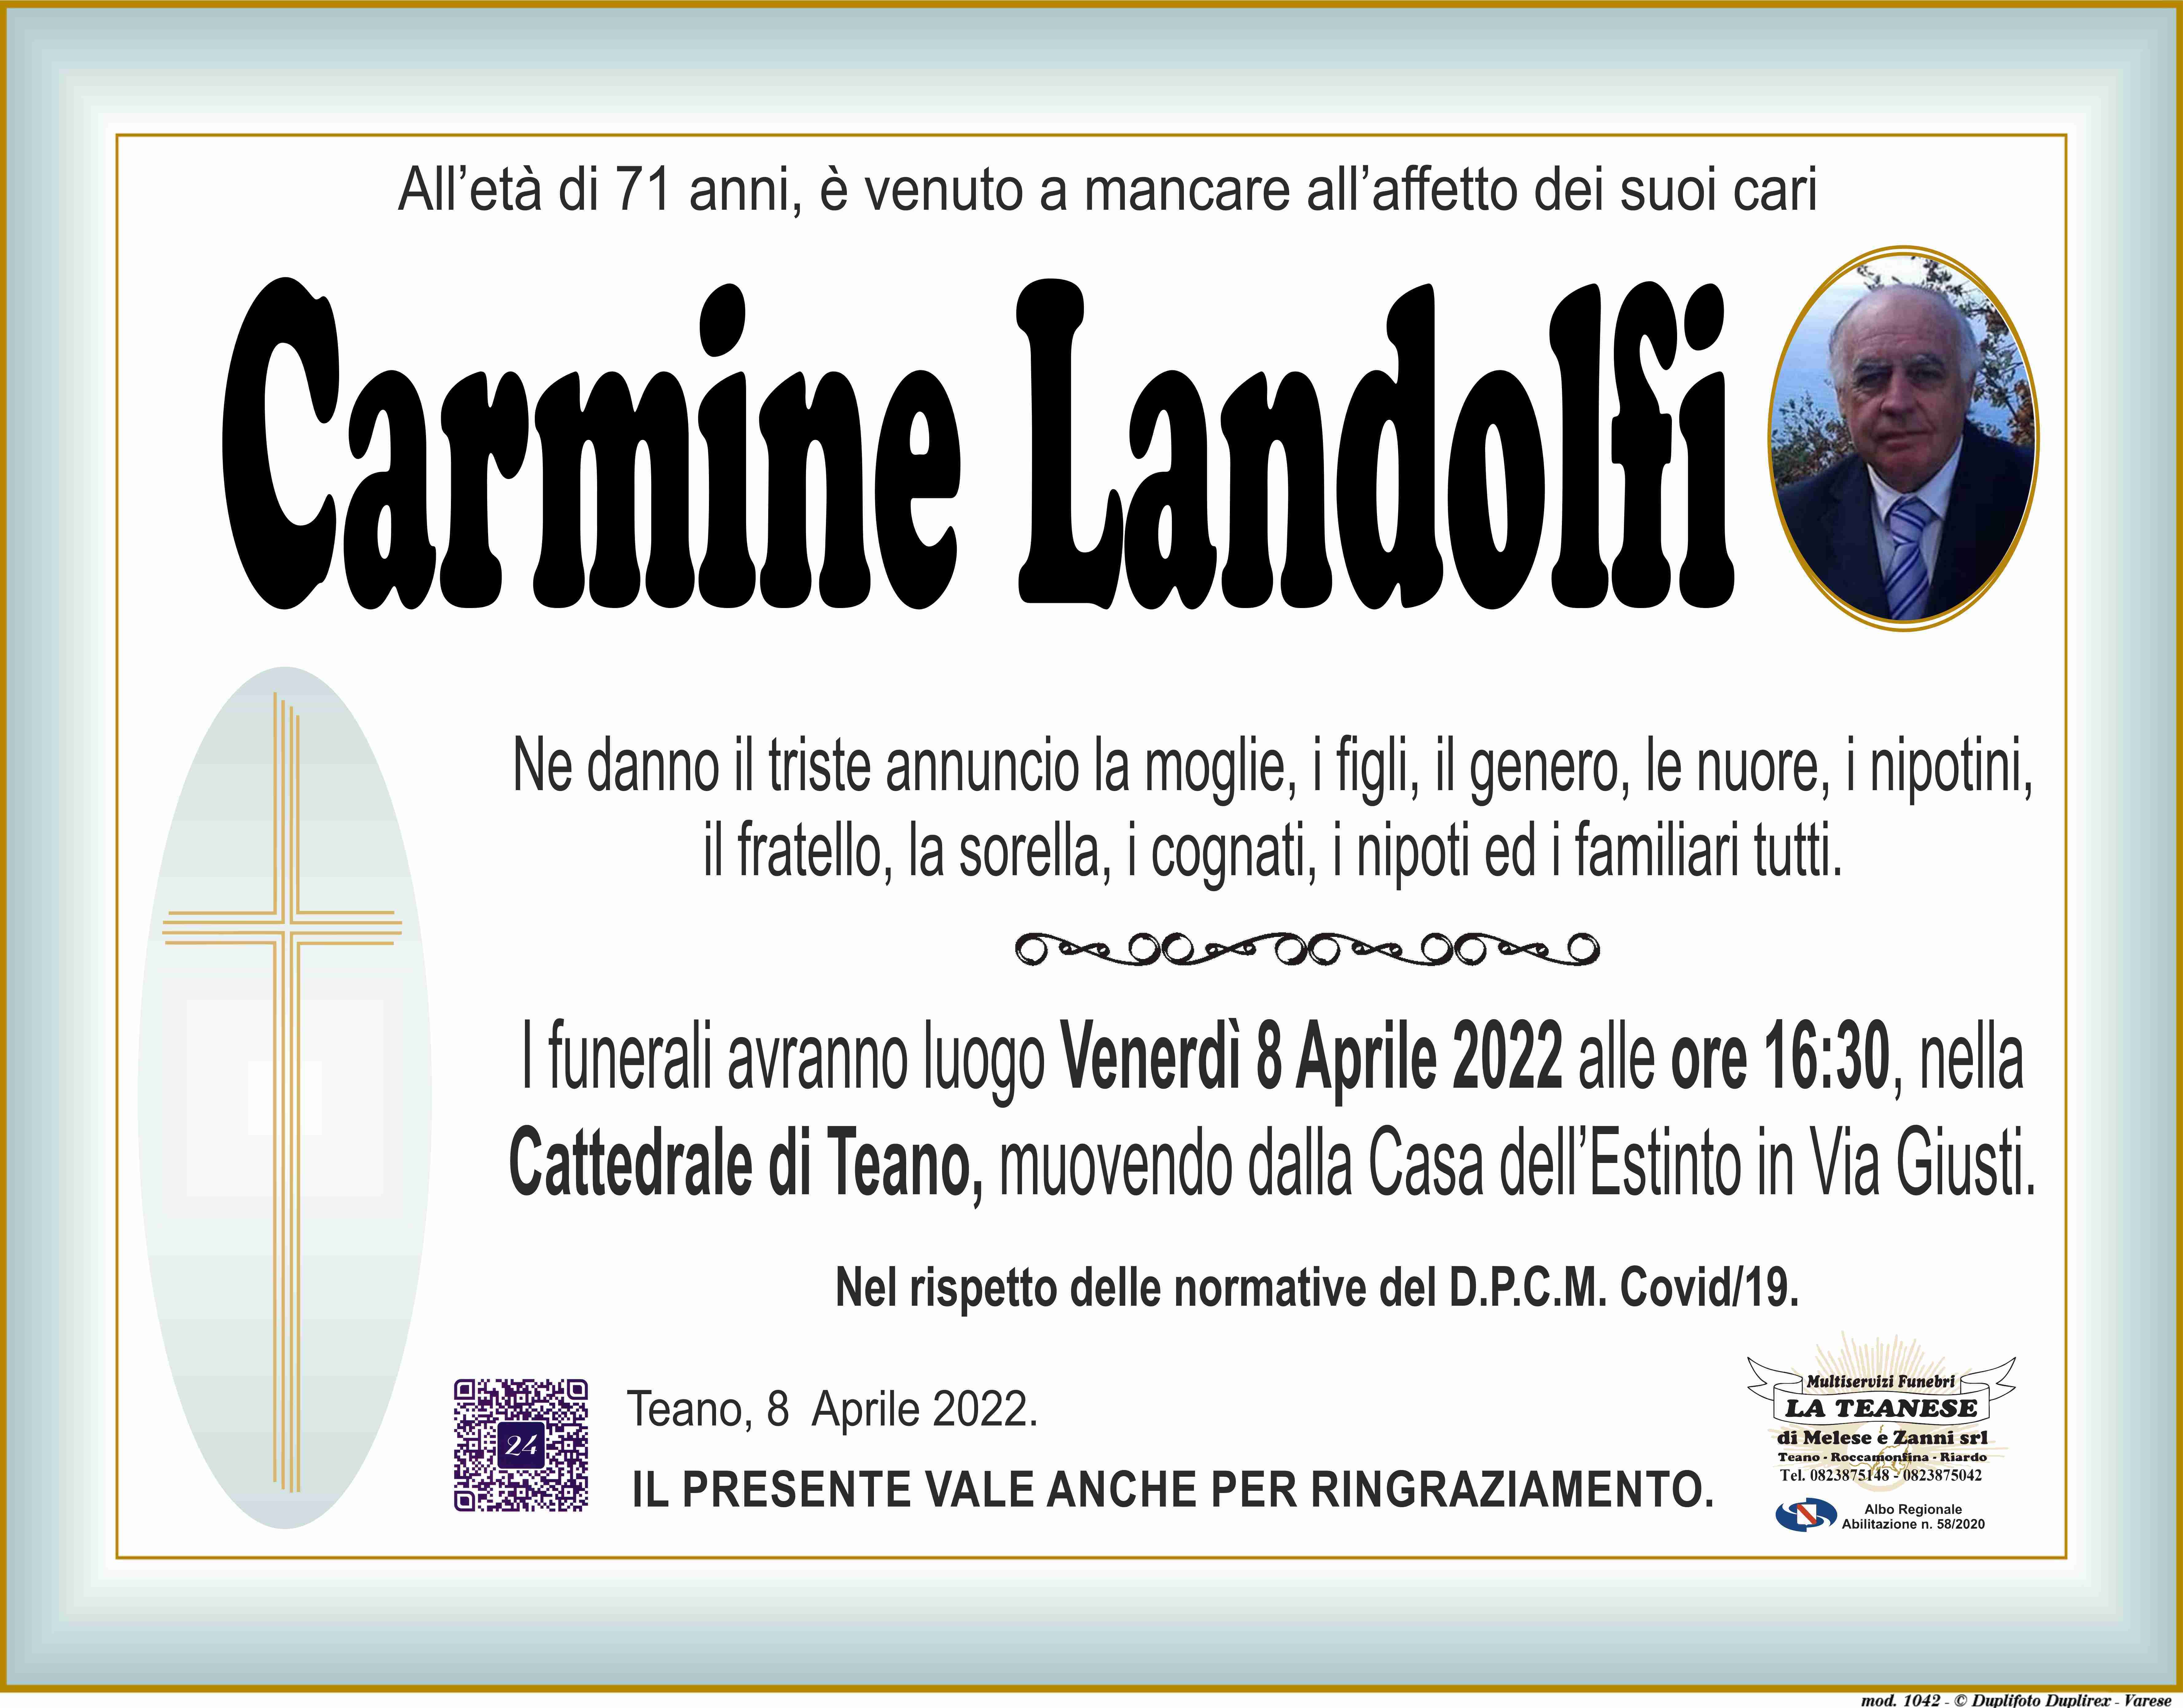 Carmine Landolfi